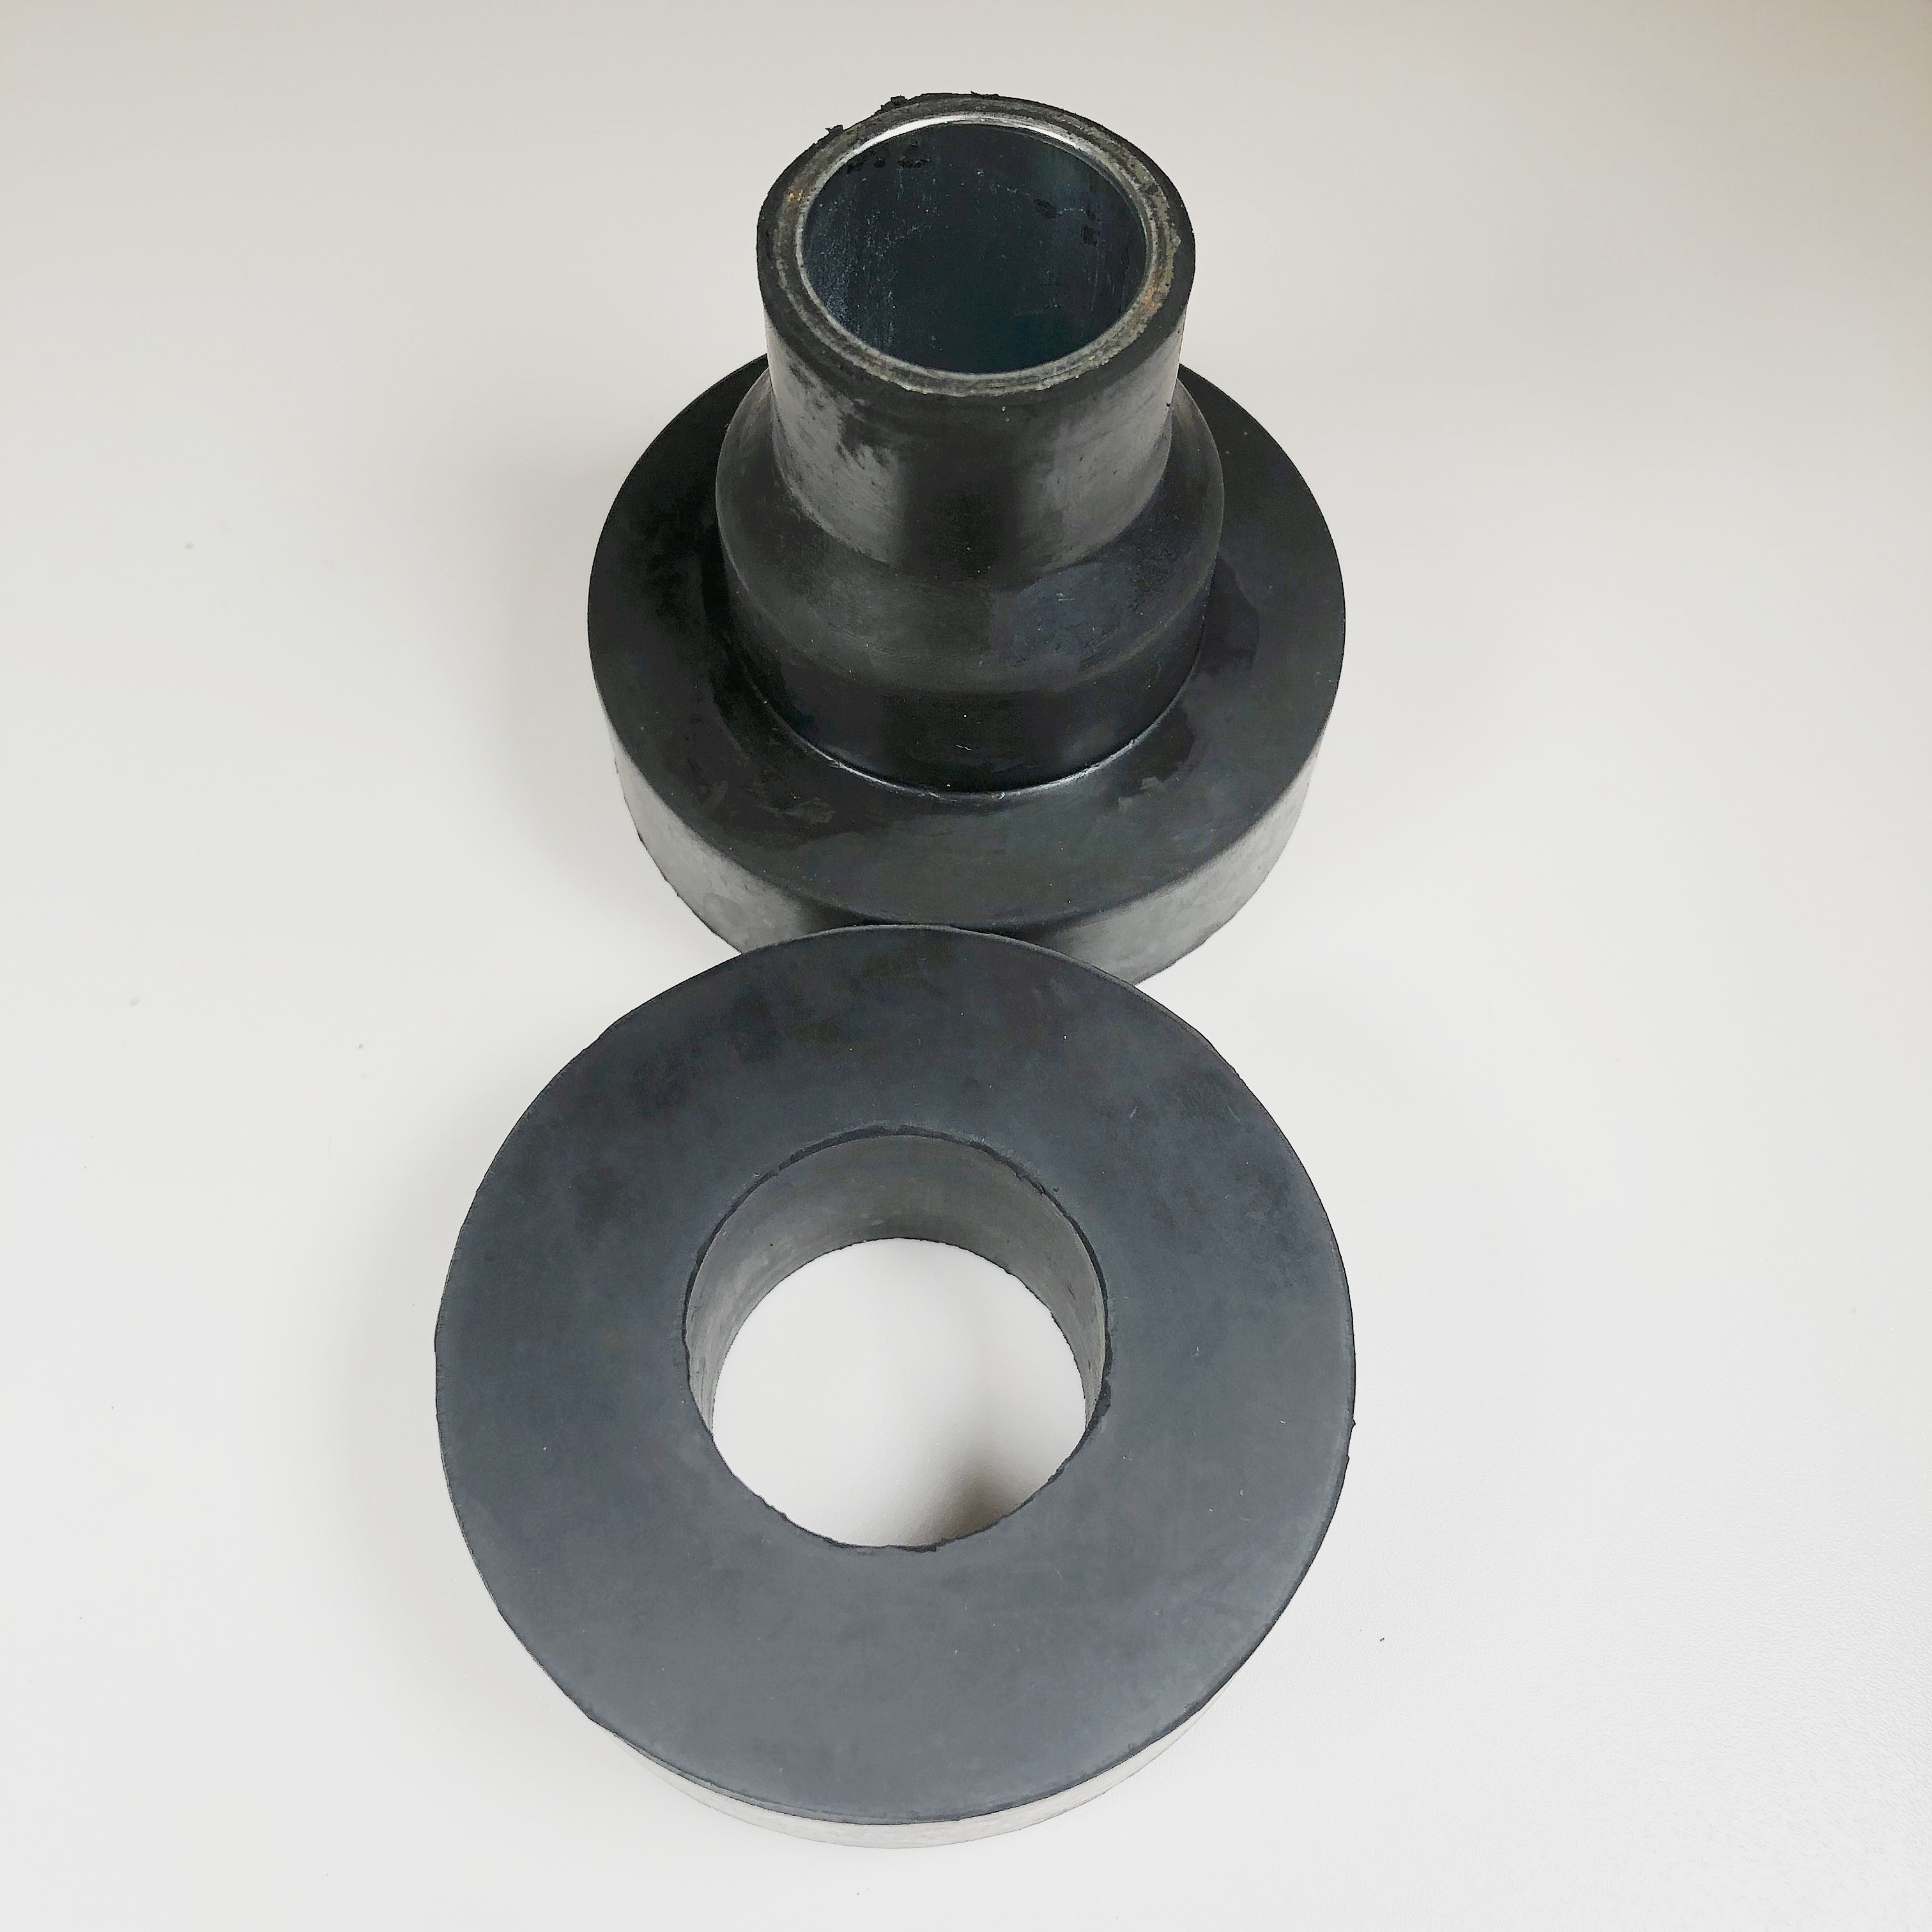 H shape vibration rubber mount assembly